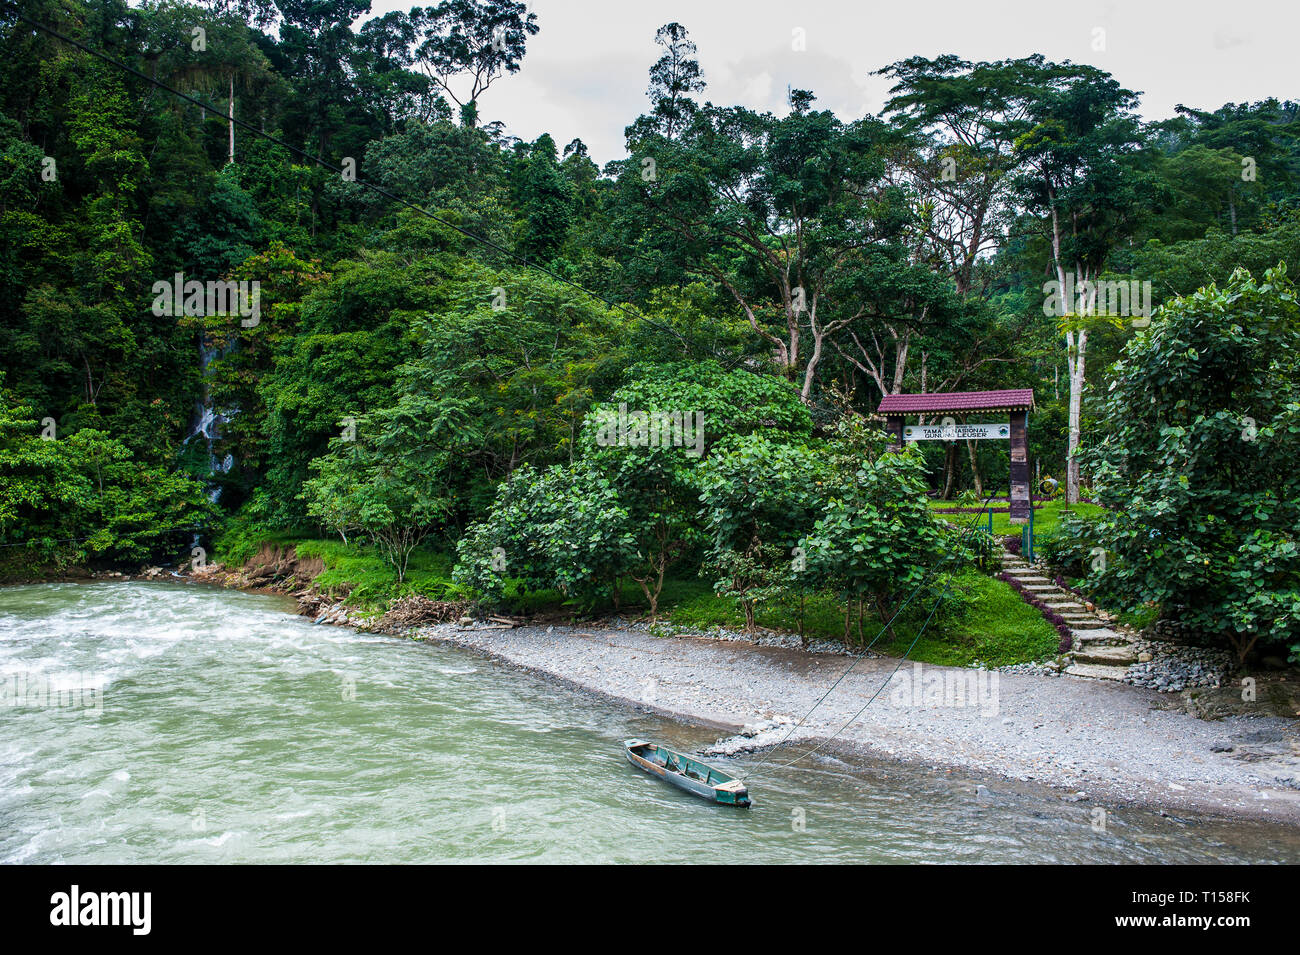 Indonesia, Sumatra, fiume Bohorok prima il Bukit Lawang degli Oranghi di stazione di riabilitazione, Foto Stock